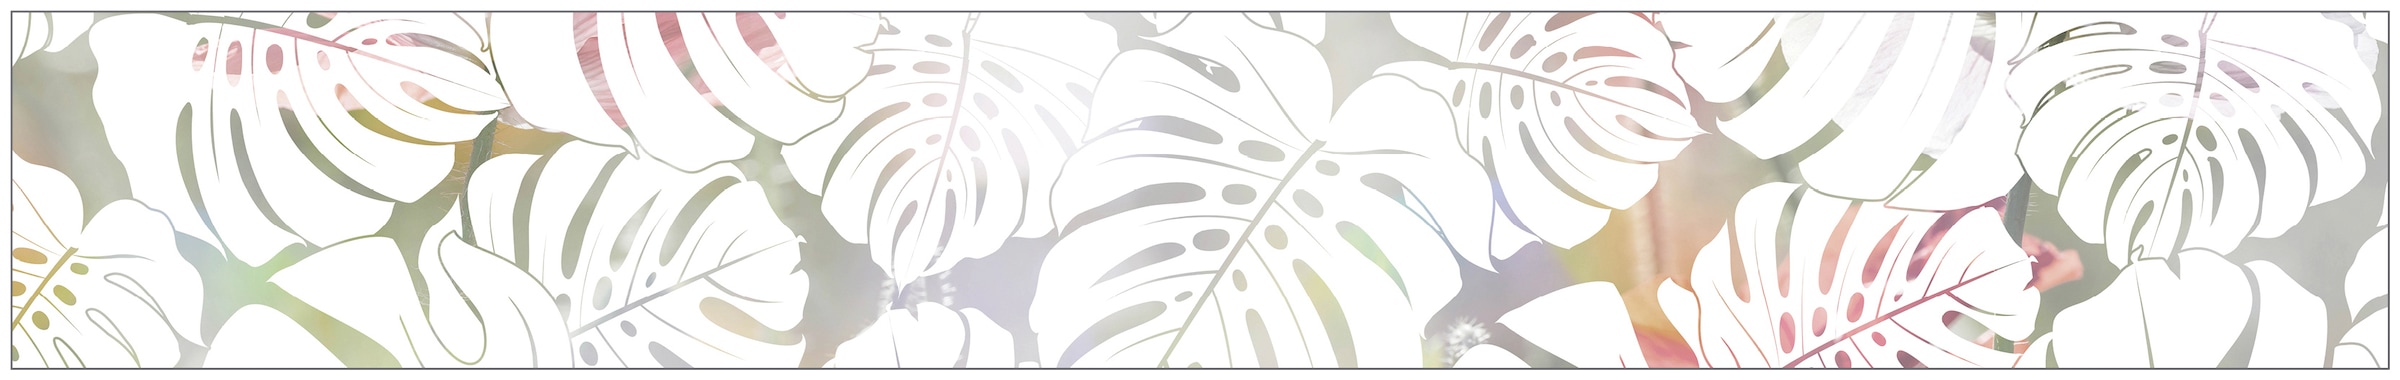 Fensterfolie Look Bamboo white, MySpotti, halbtransparent, glatt, 90 x 100  cm, statisch haftend